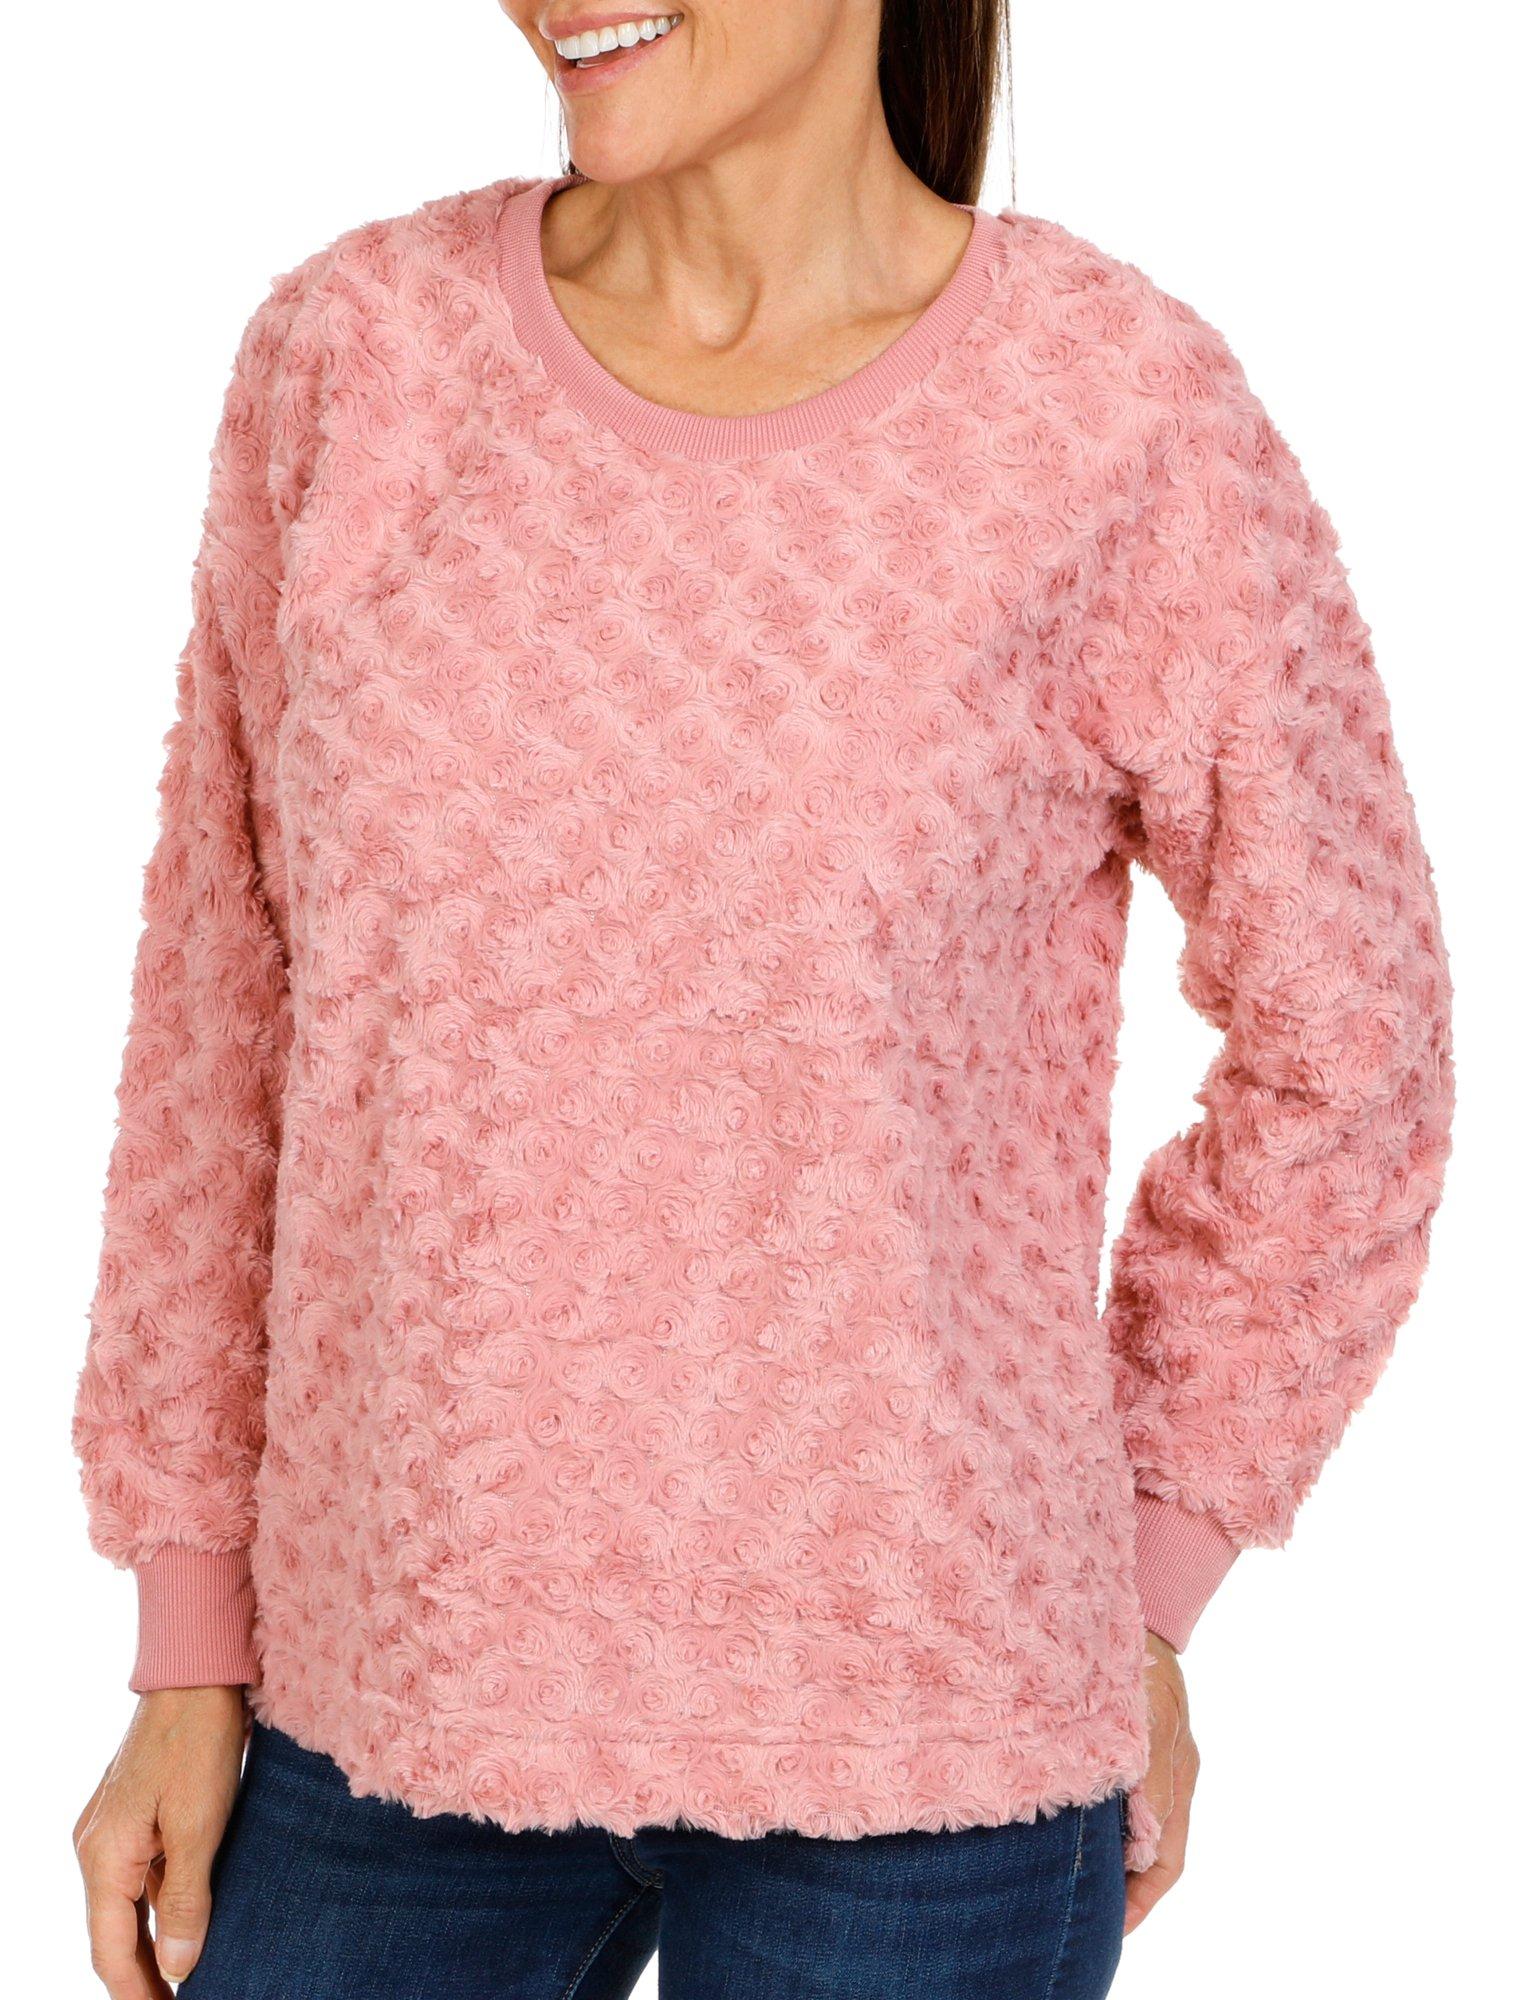 Women's Long Sleeve Sherpa Rose Pullover Sweater